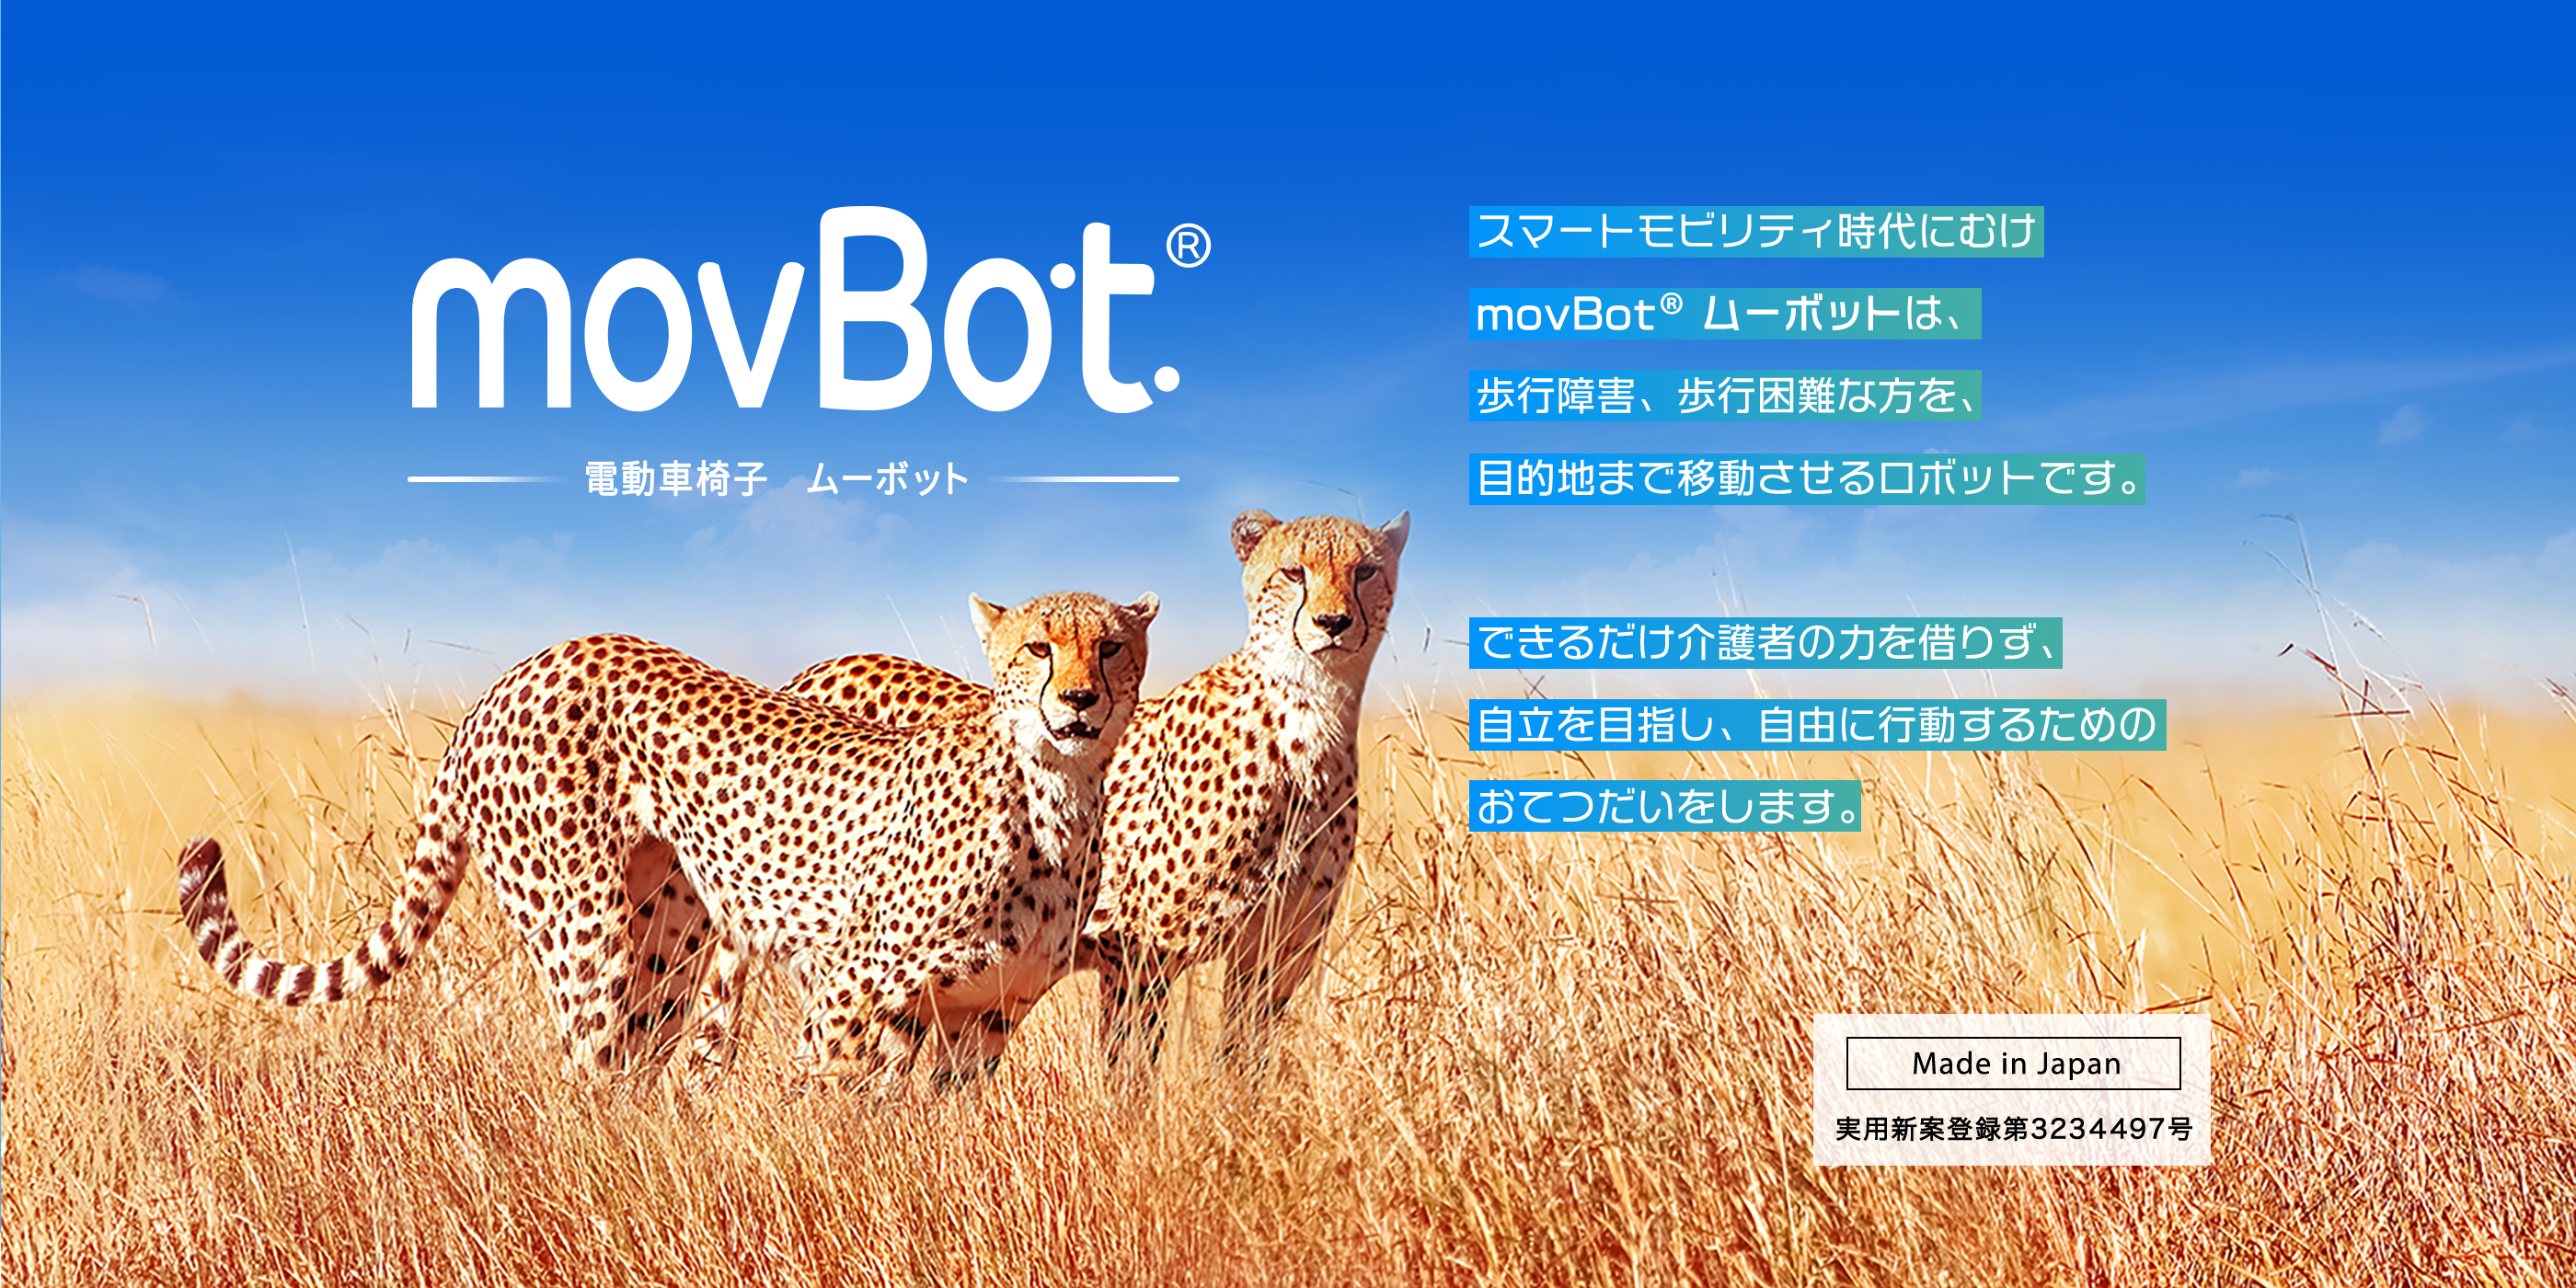 movBot スマートモビリティ時代にむけ歩行障害、歩行困難な方を目的地まで移動させるロボットです。